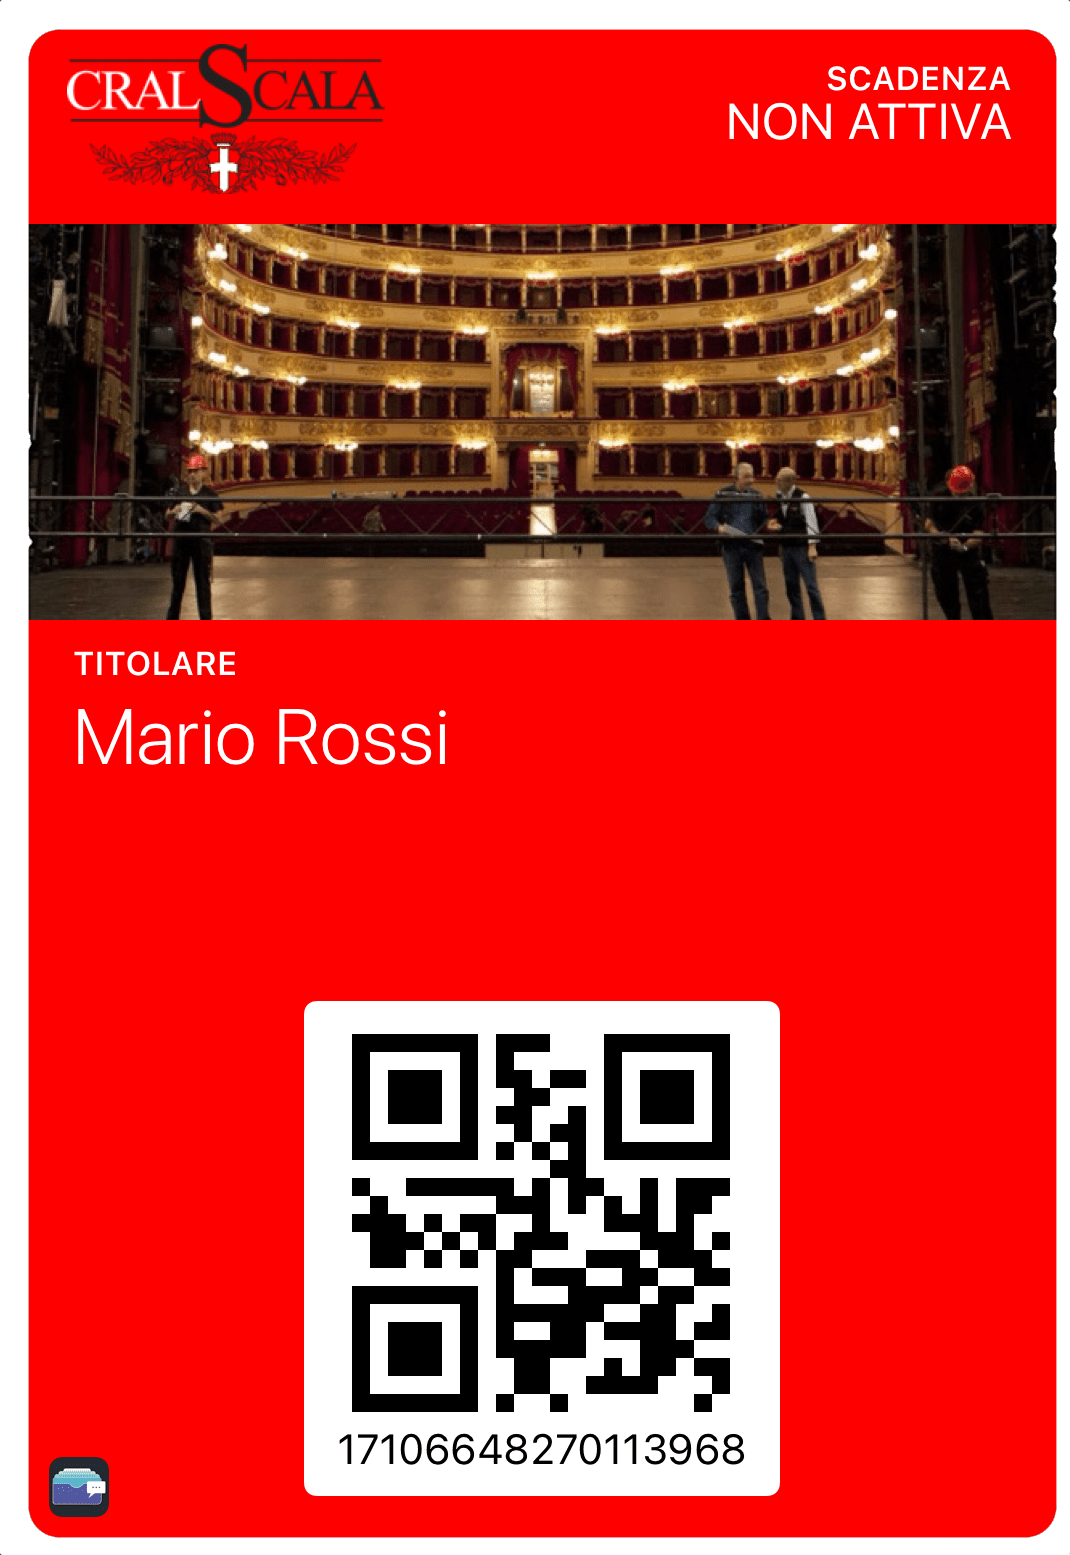 CRAL Teatro La Scala Milano